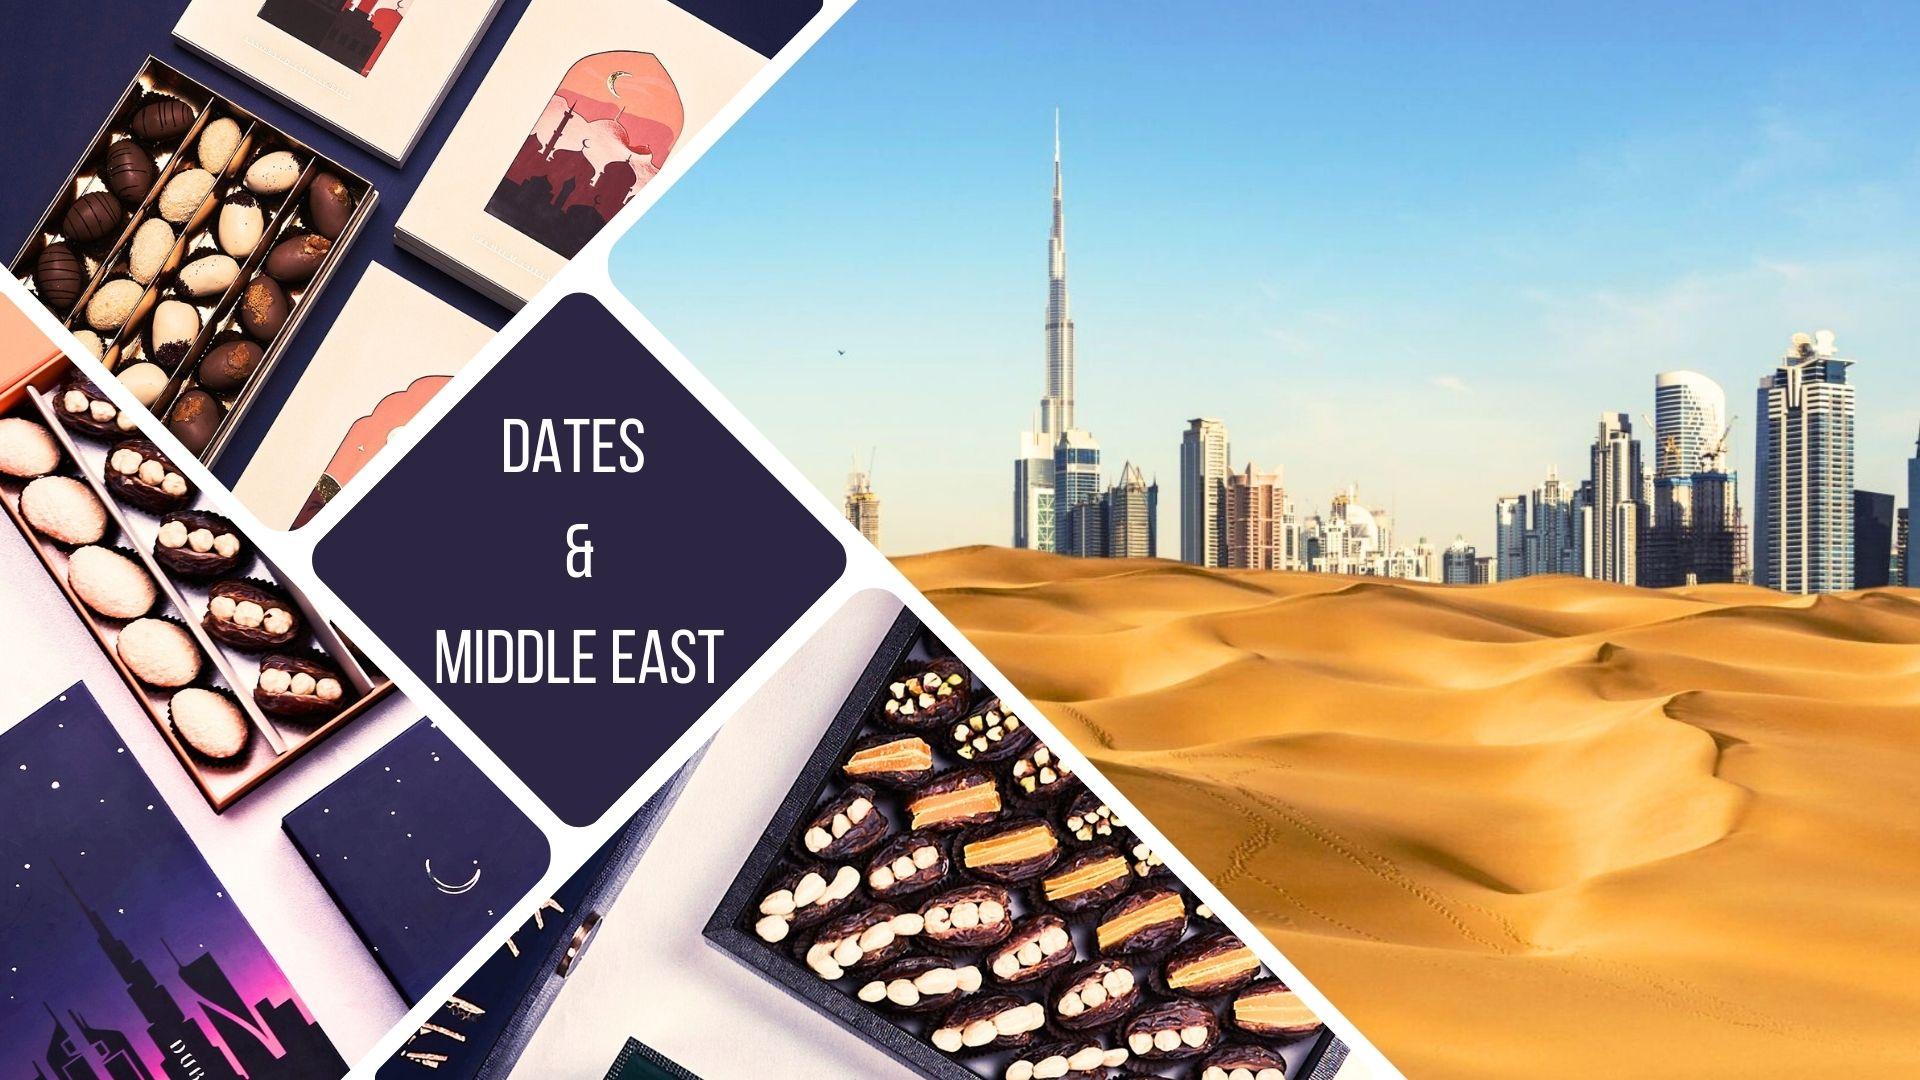 Date Chocolate Packaging Dubai Doha Saudi